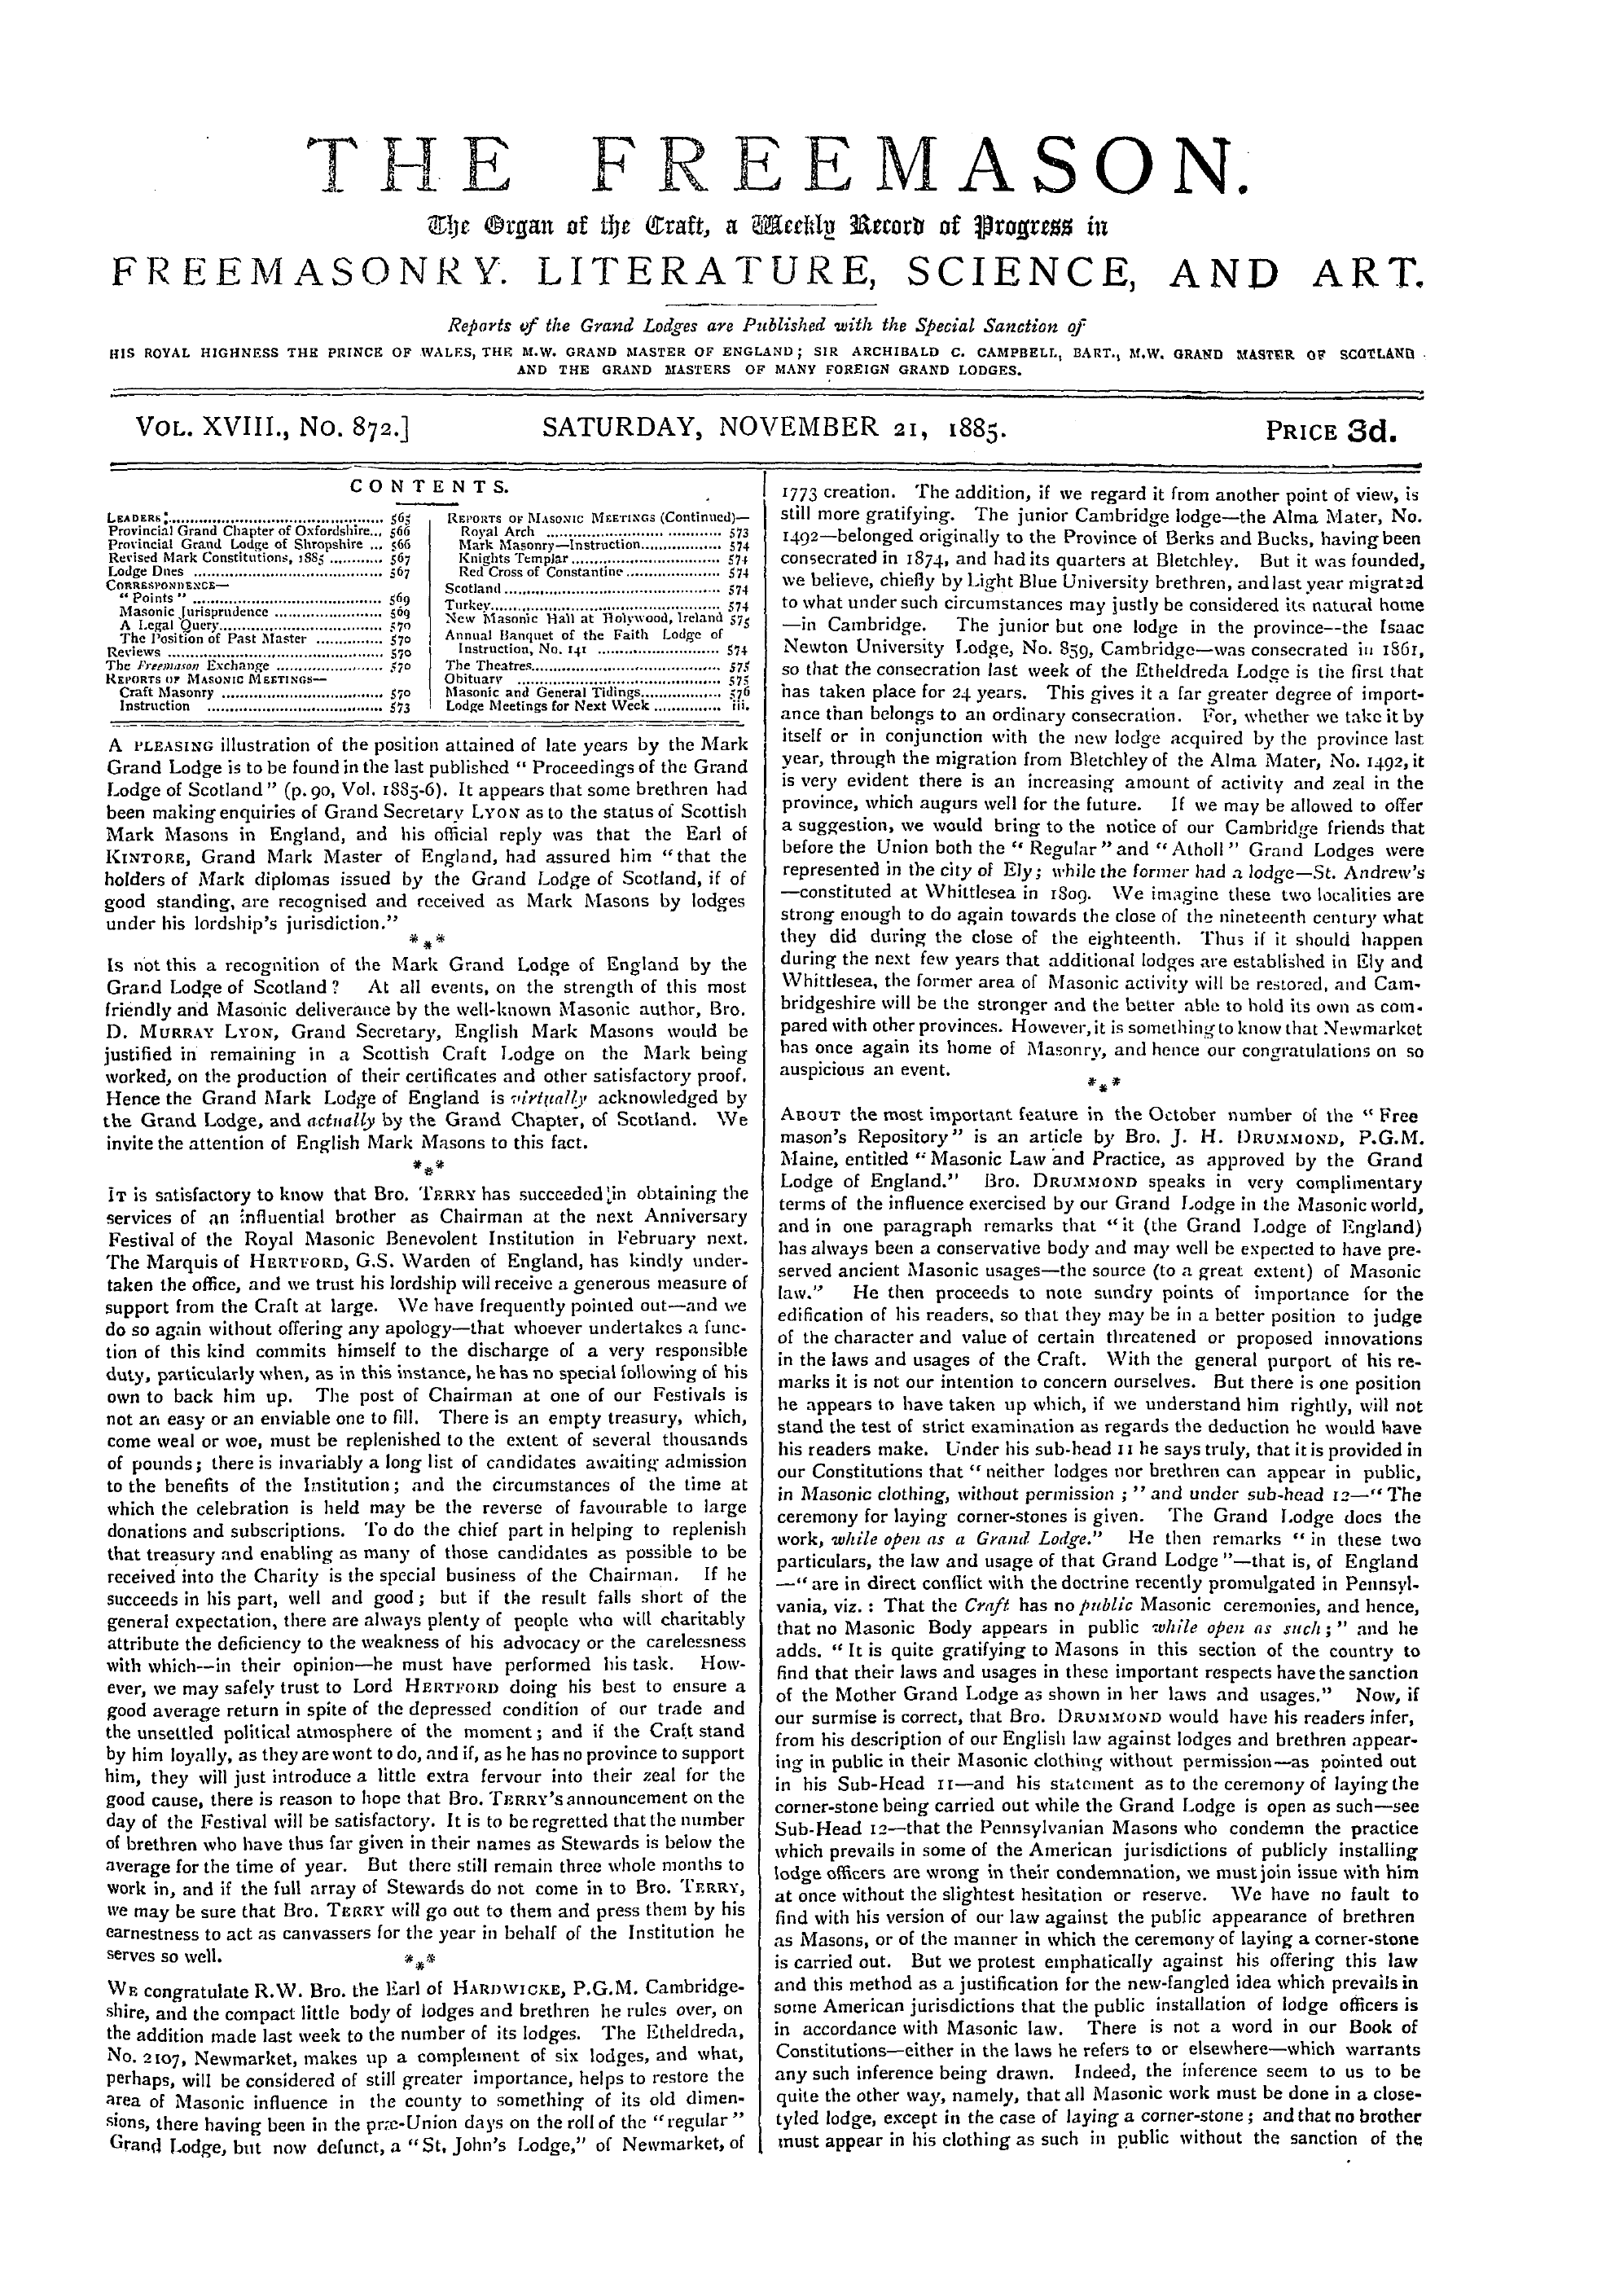 The Freemason: 1885-11-21 - Contents.